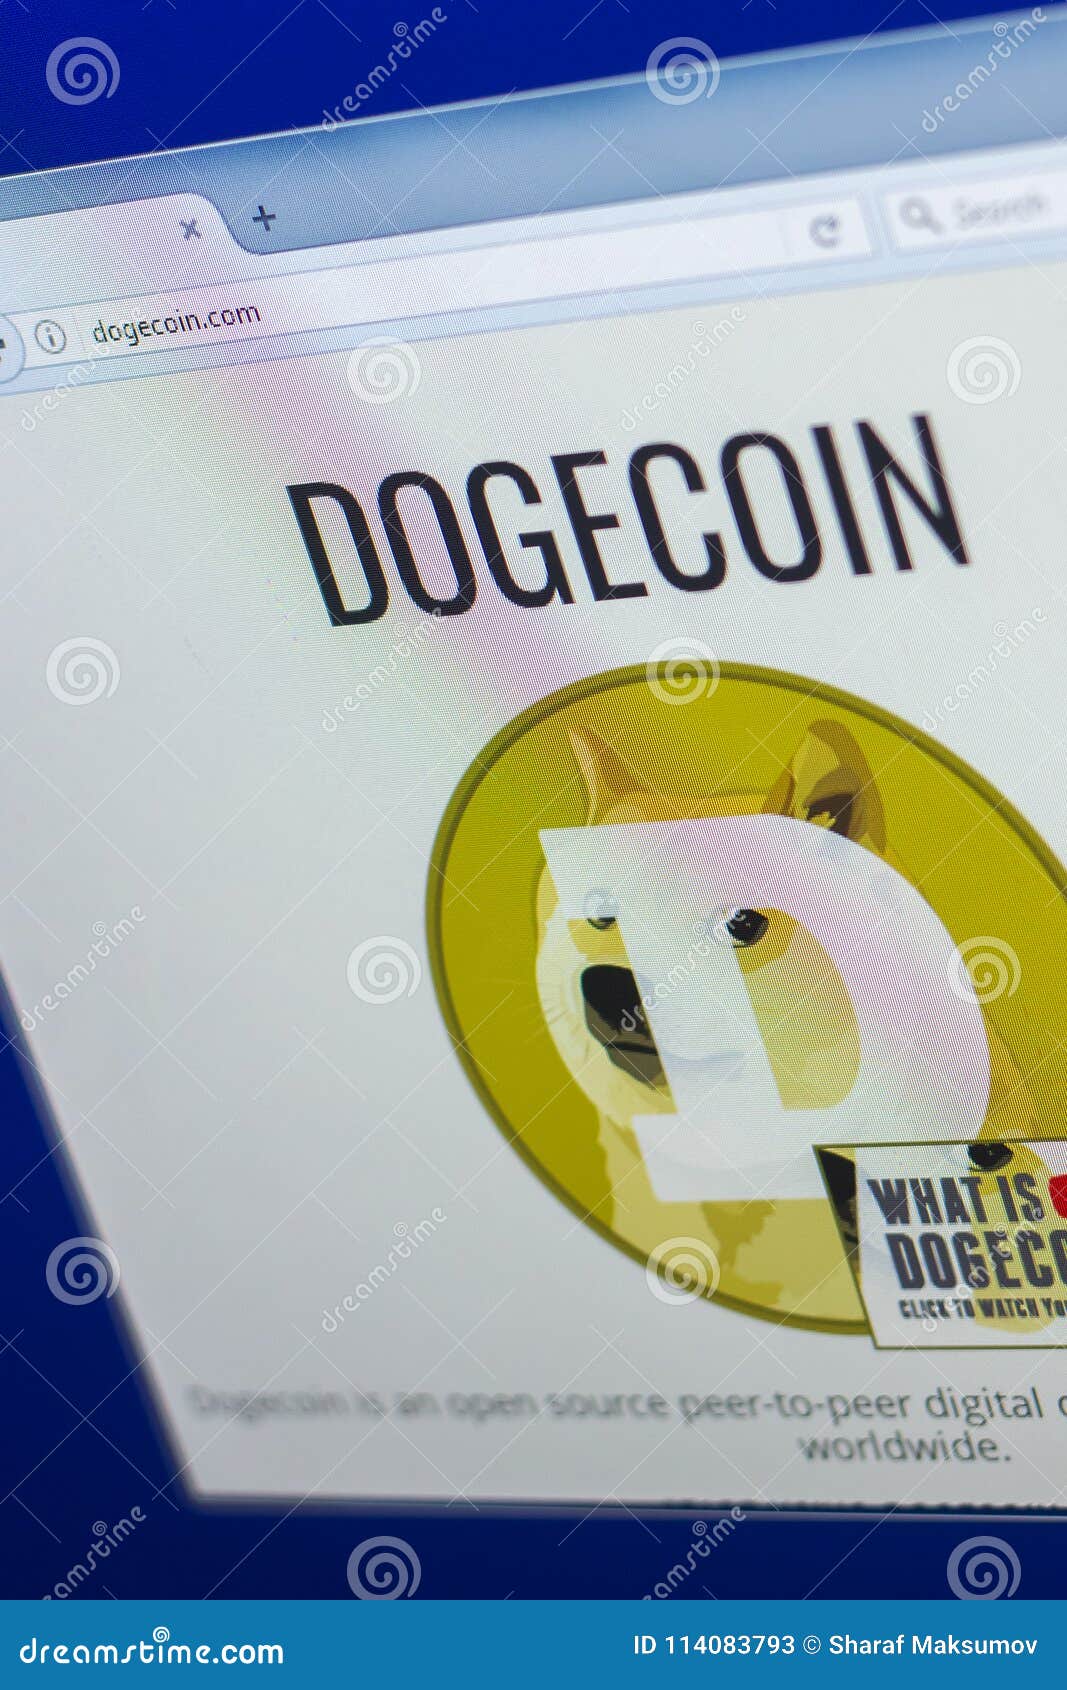 dogecoin crypto address